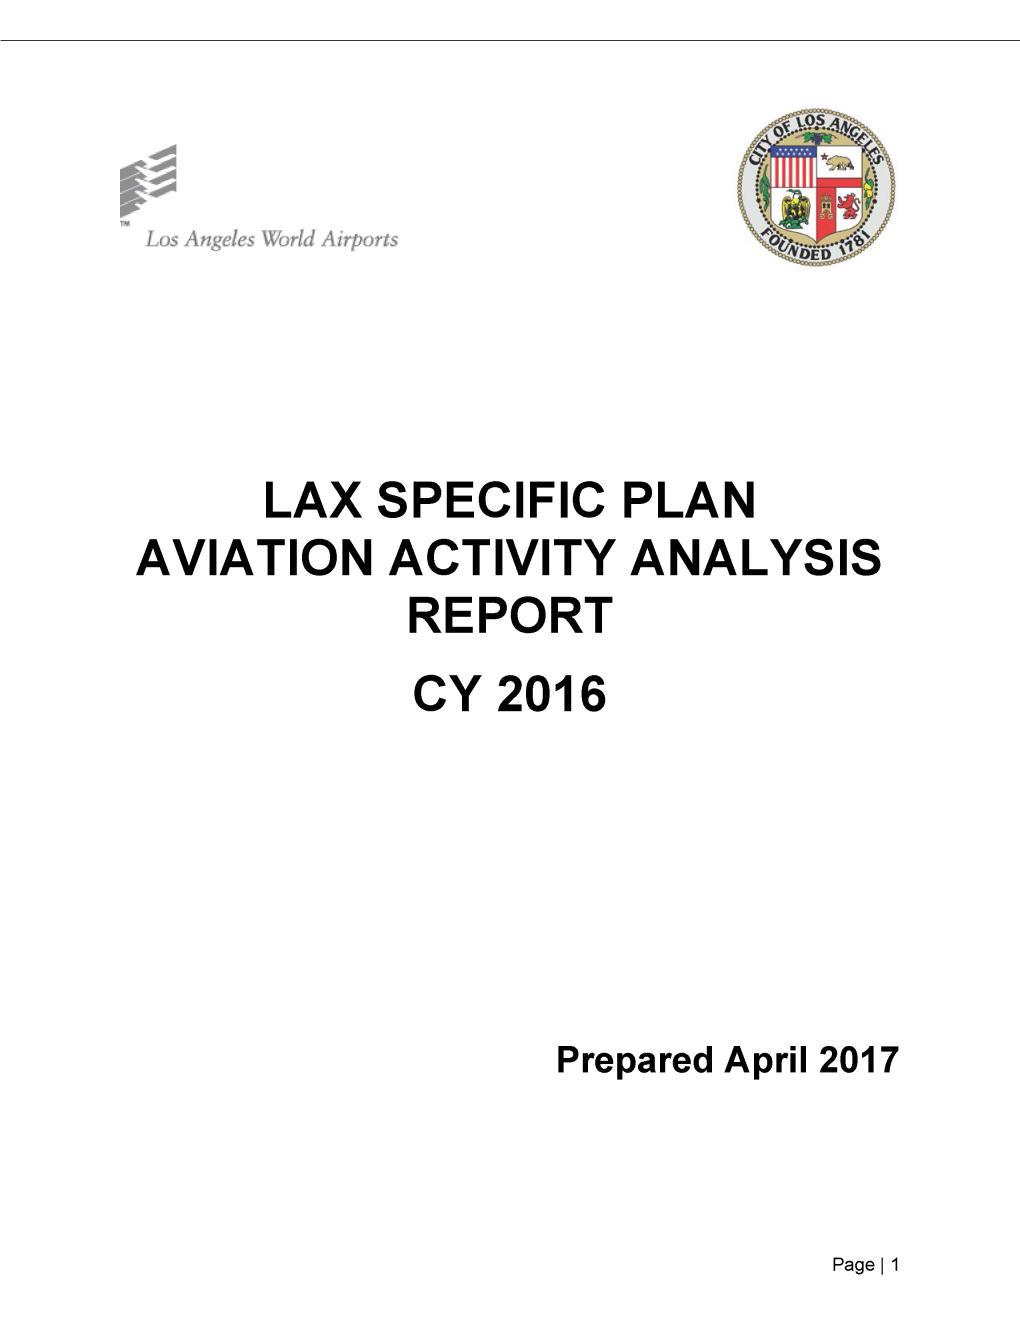 2010 Aviation Activity Analysis Report